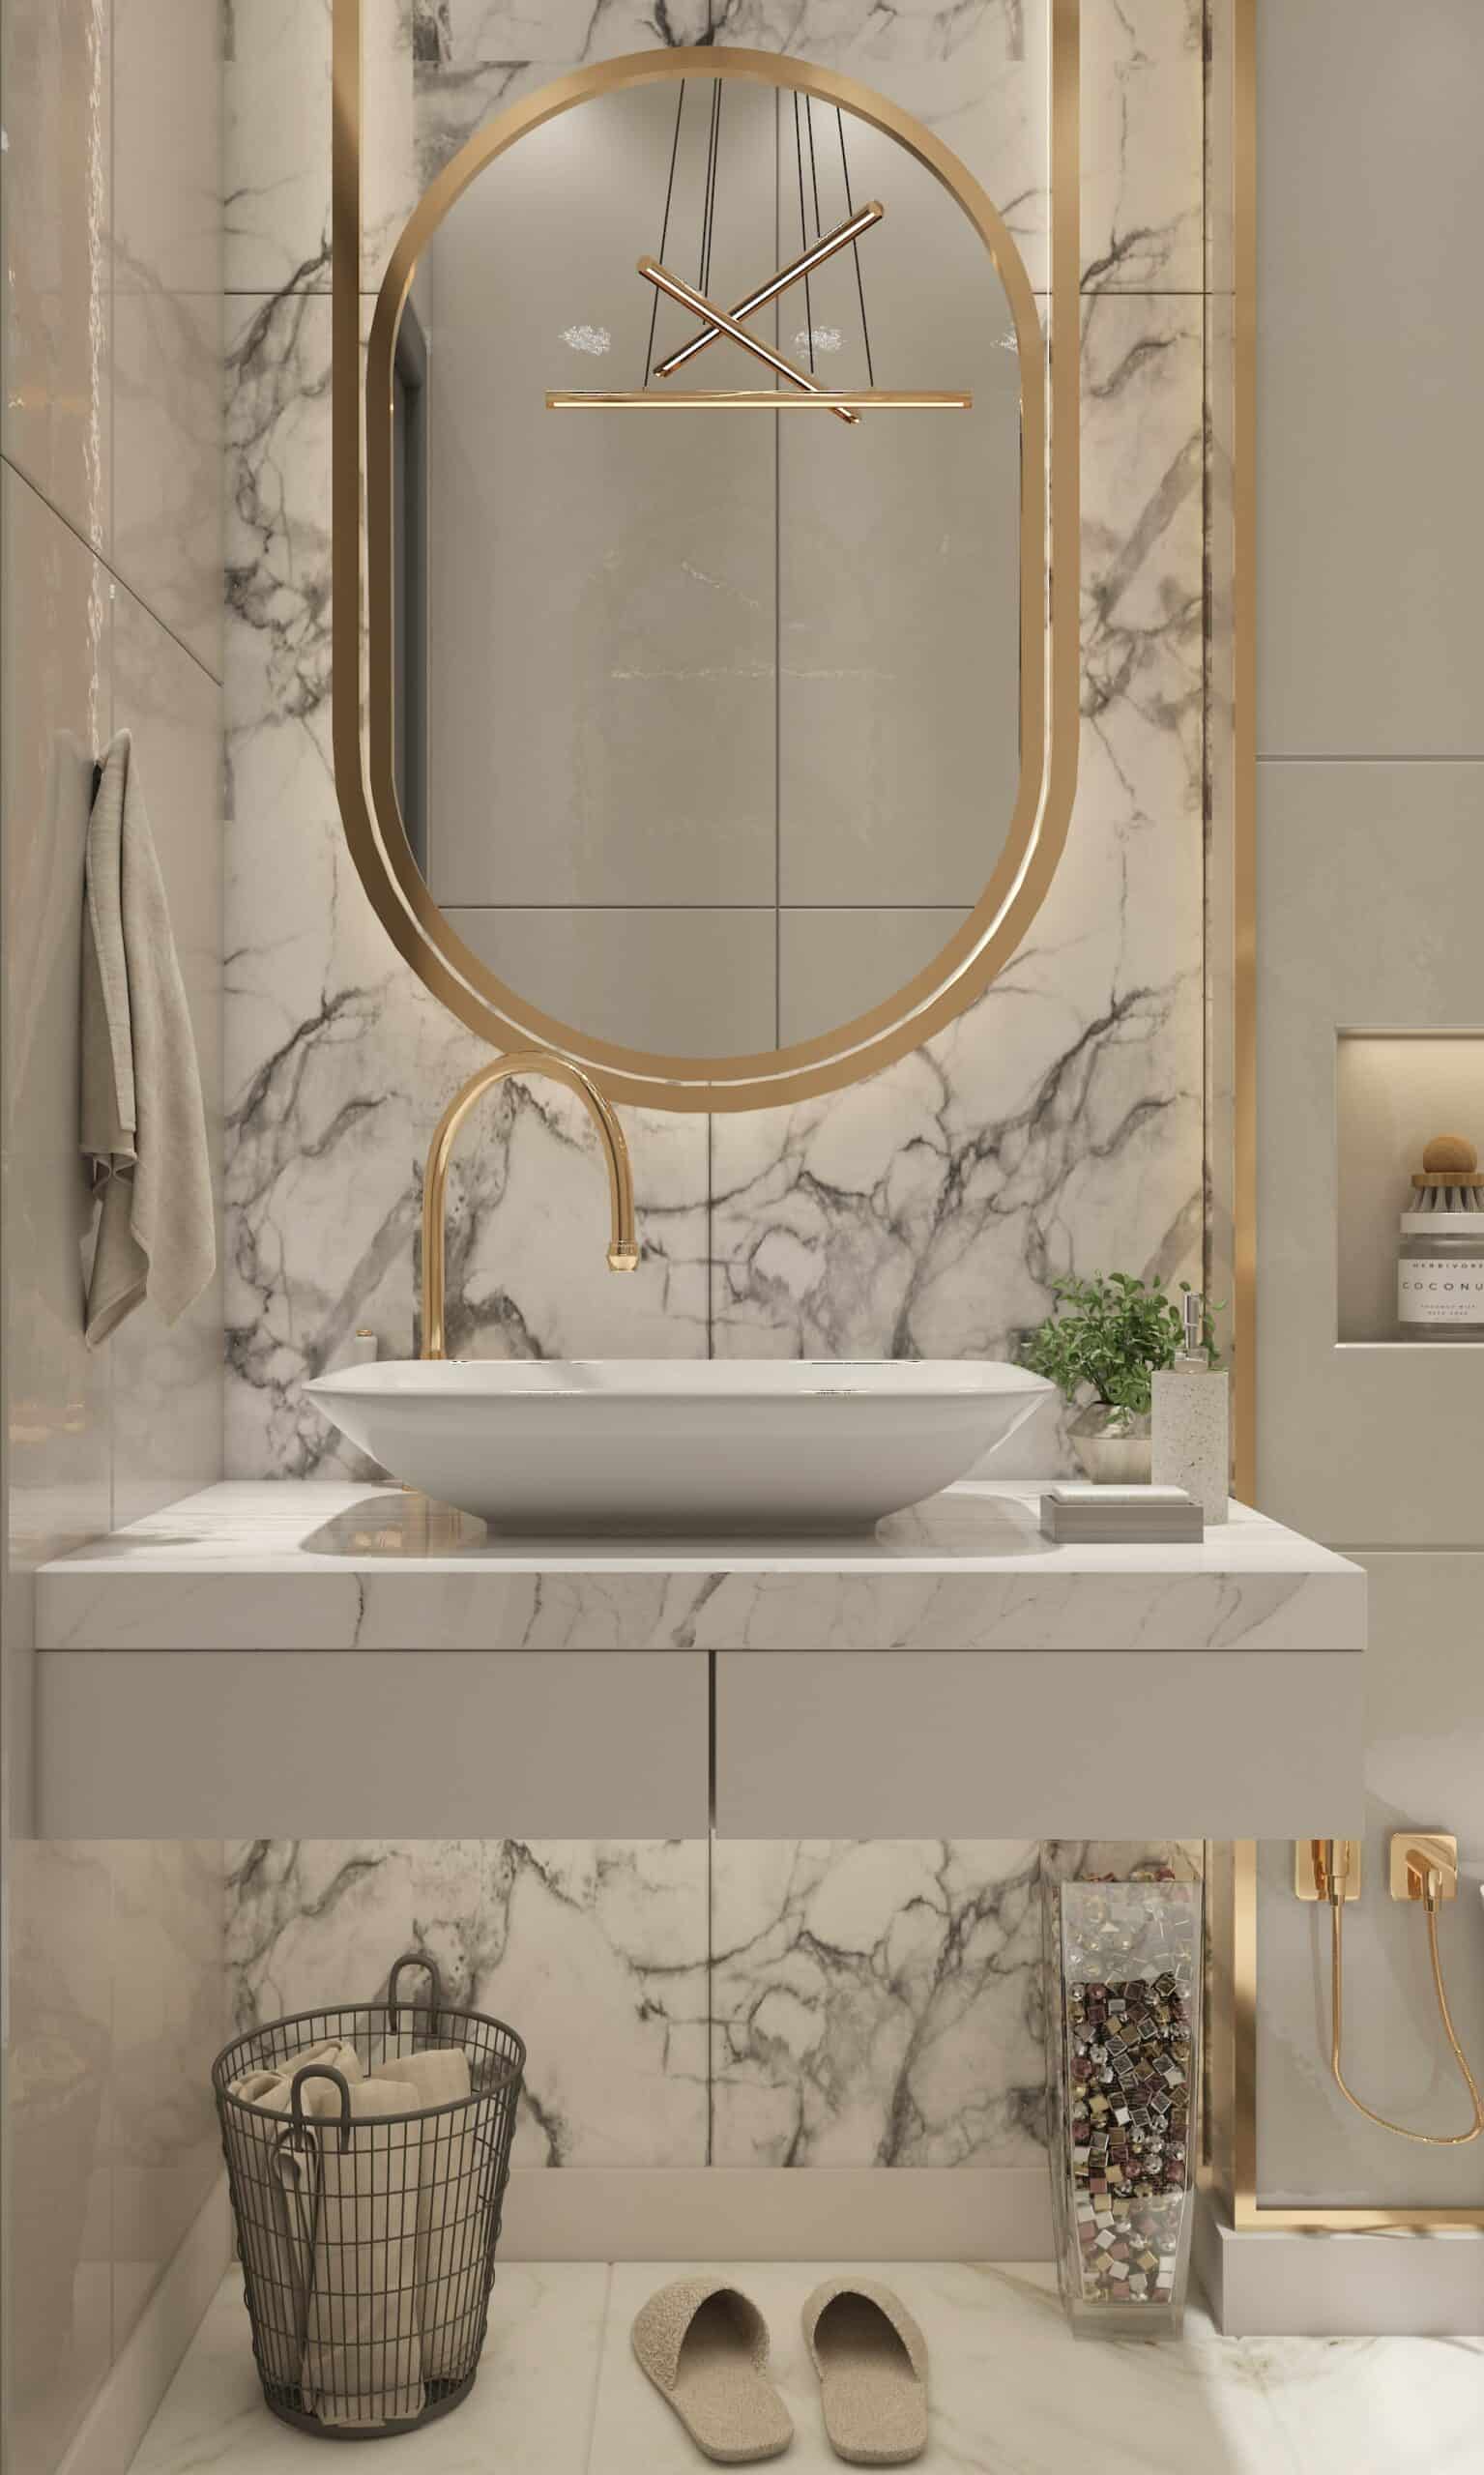 https://kitchenandbathshop.com/wp-content/uploads/2021/01/bathroom-floating-vanity-scaled.jpg